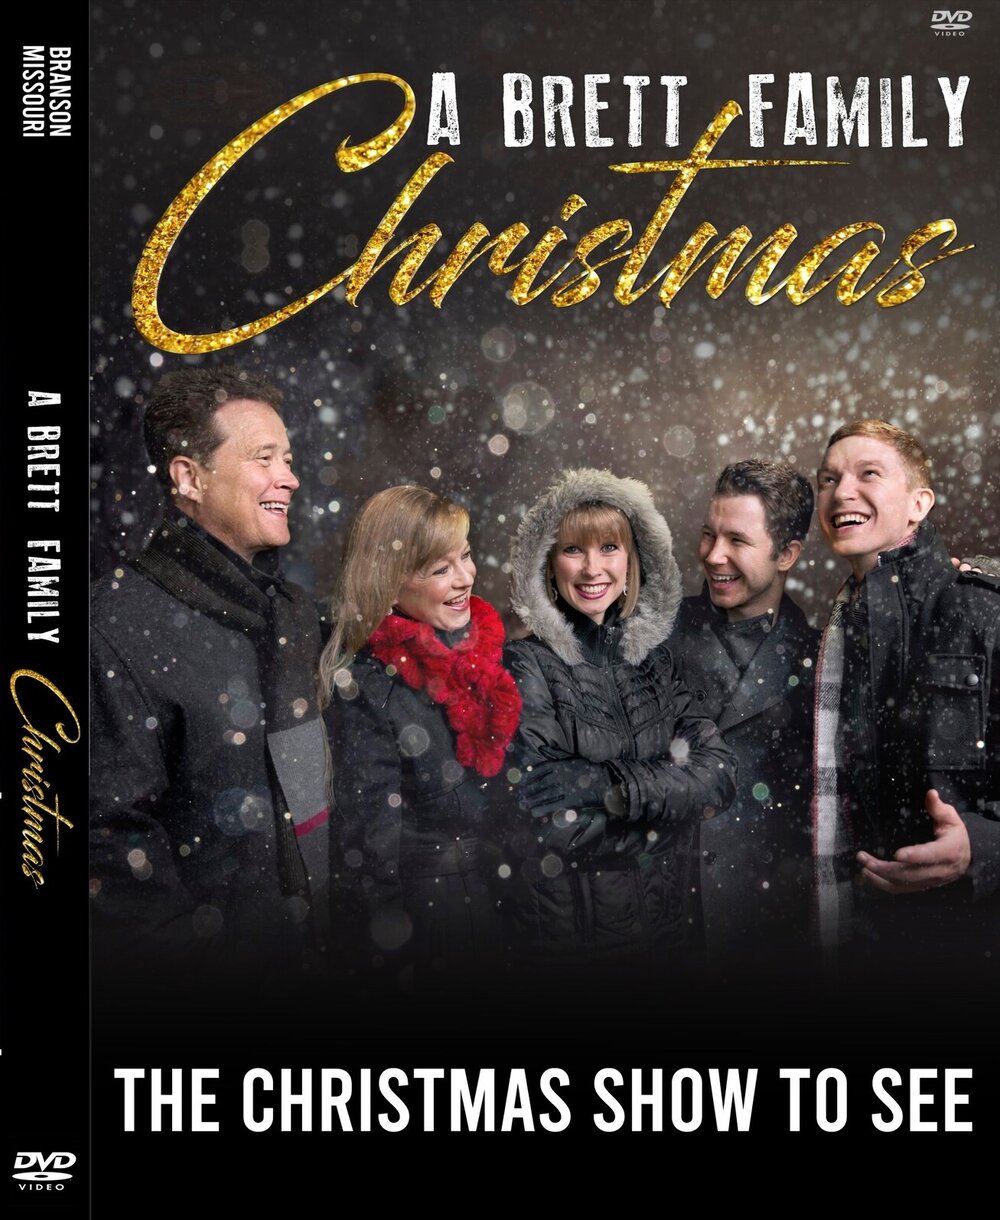 A Brett Family Christmas